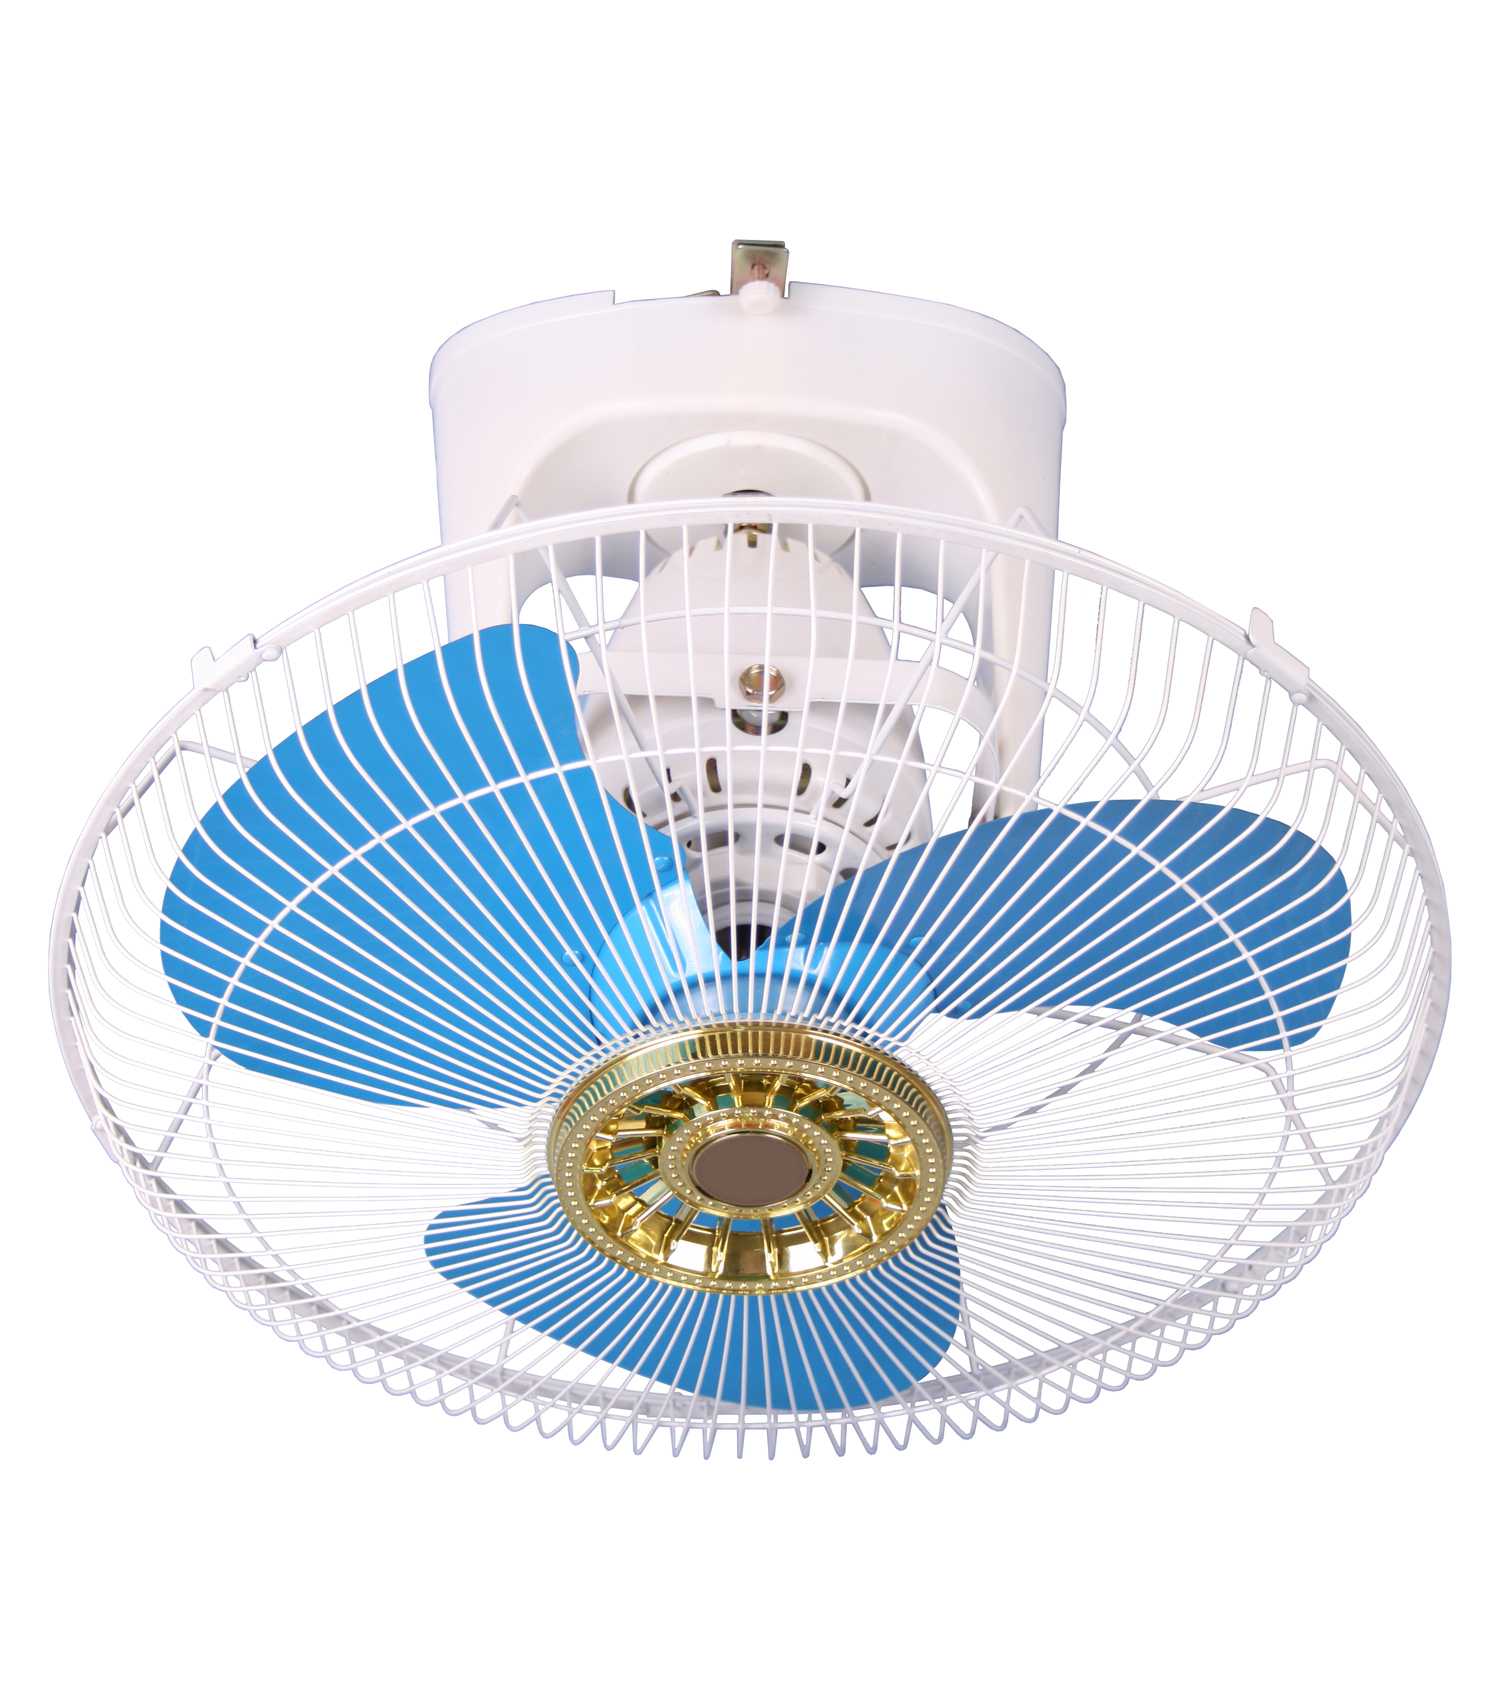 16 Inch 360 degree oscillation plastic blades ceiling roof orbit fan SR-O1602